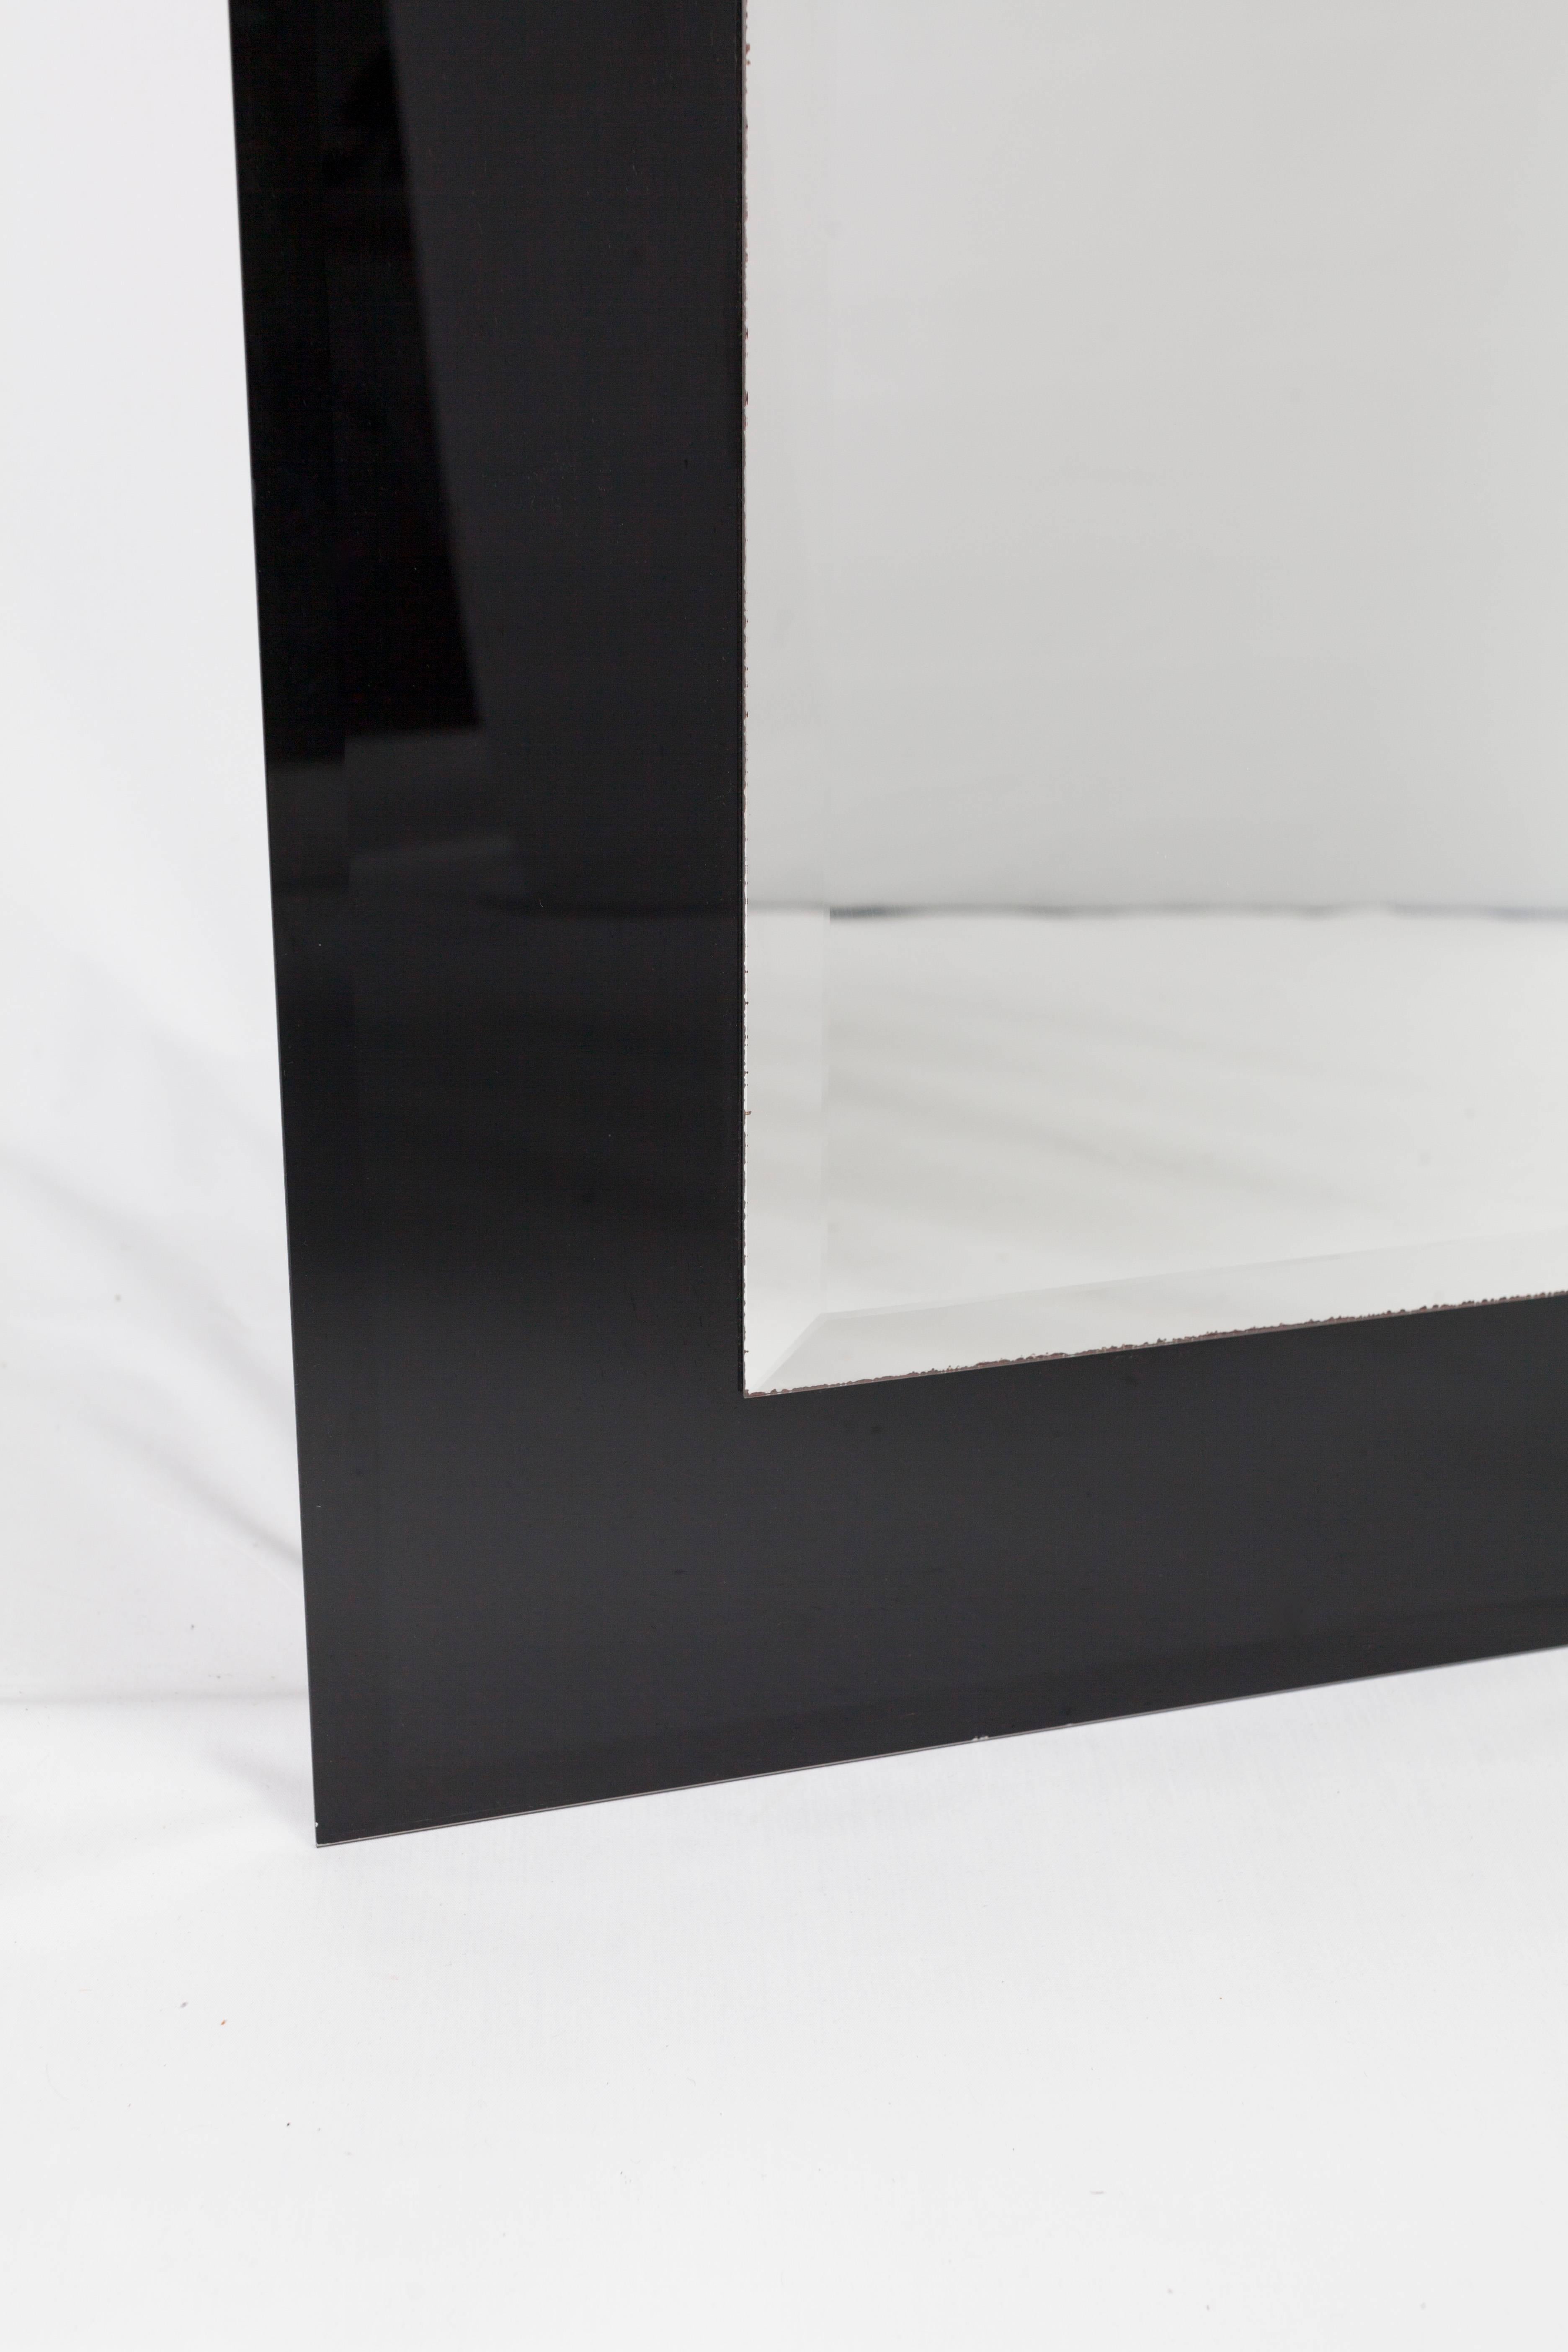 asymmetric wall mirror